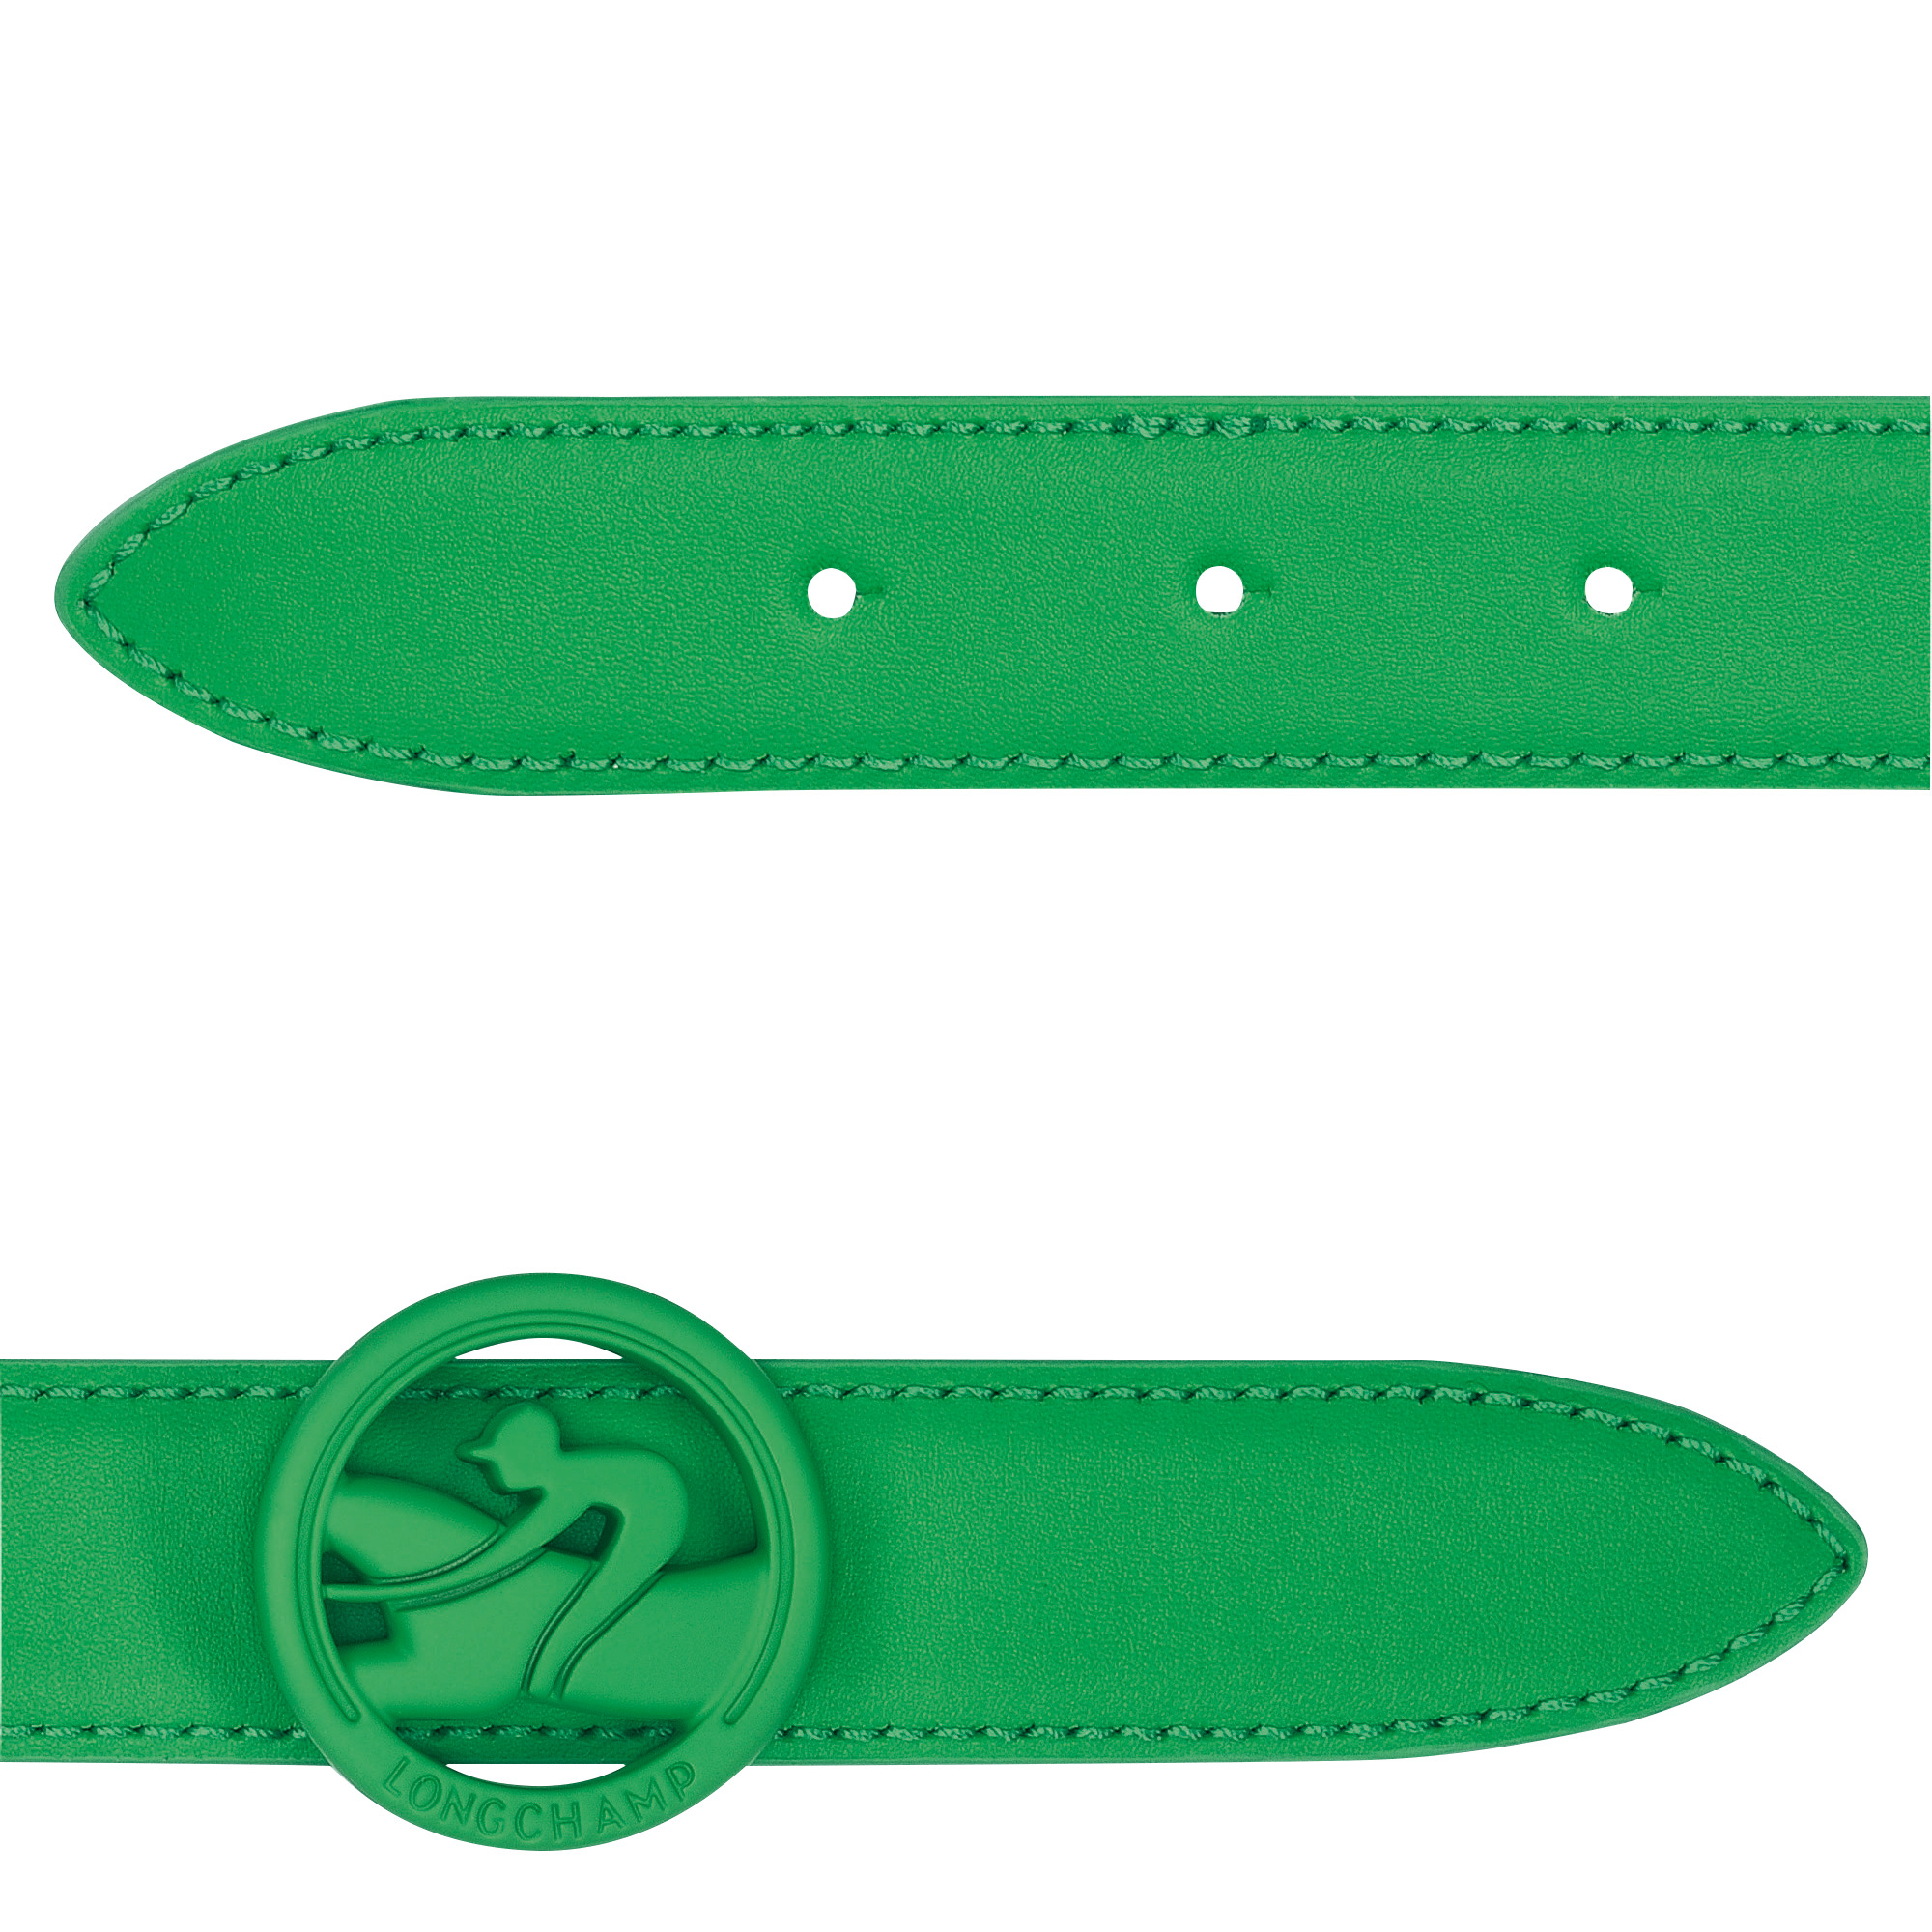 Box-Trot Ladies' belt Lawn - Leather - 2